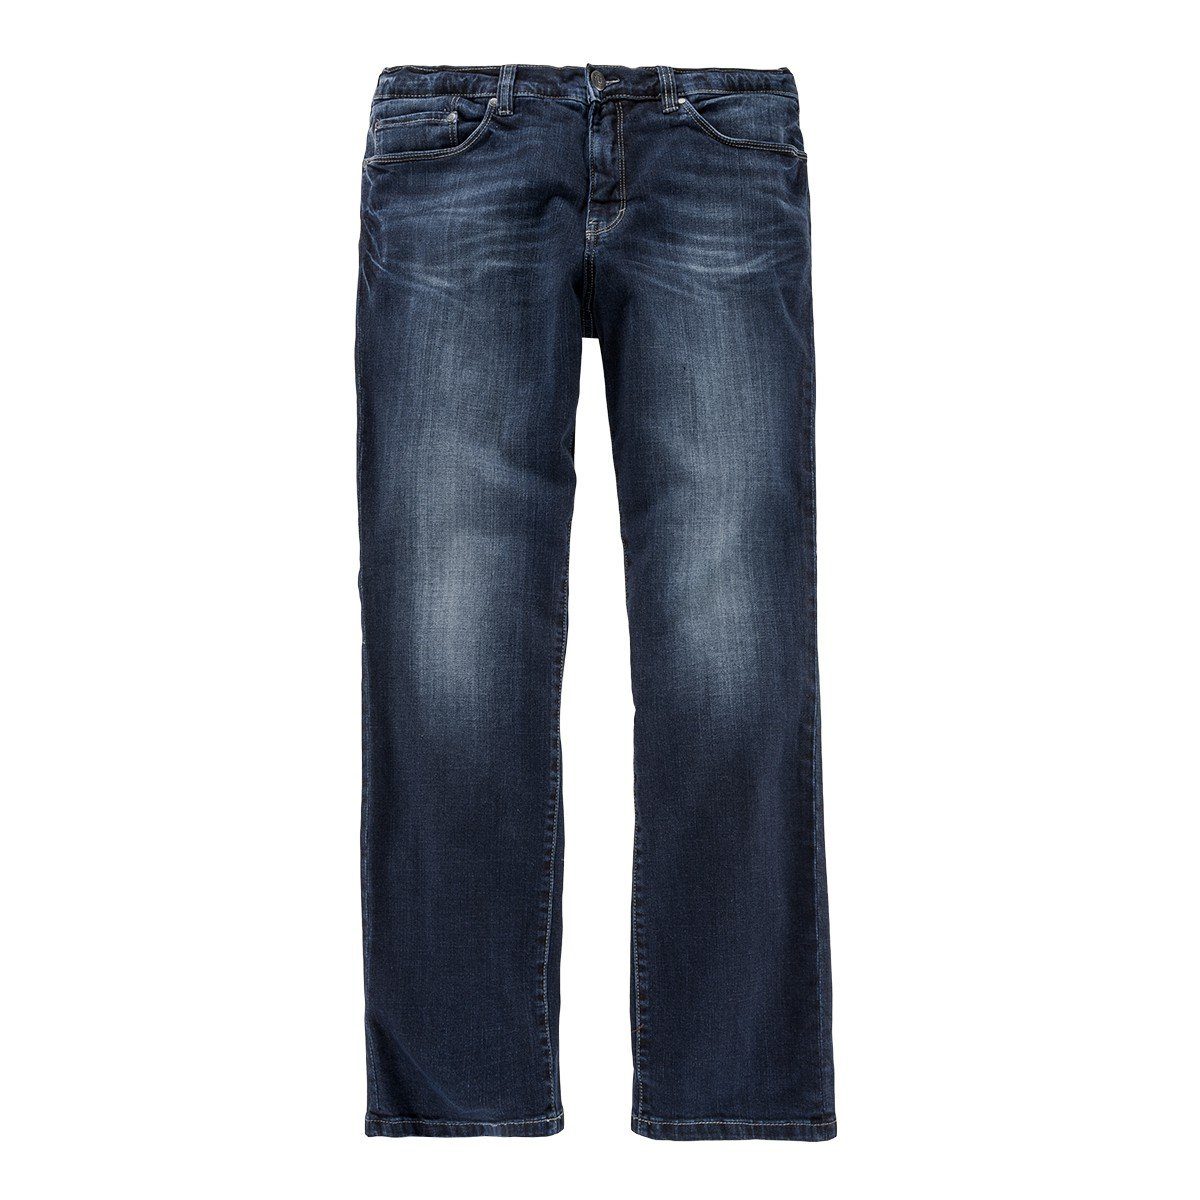 Paddock's Bequeme Paddock´s Jeans Ranger Jeans Übergrößen stone used dark blue